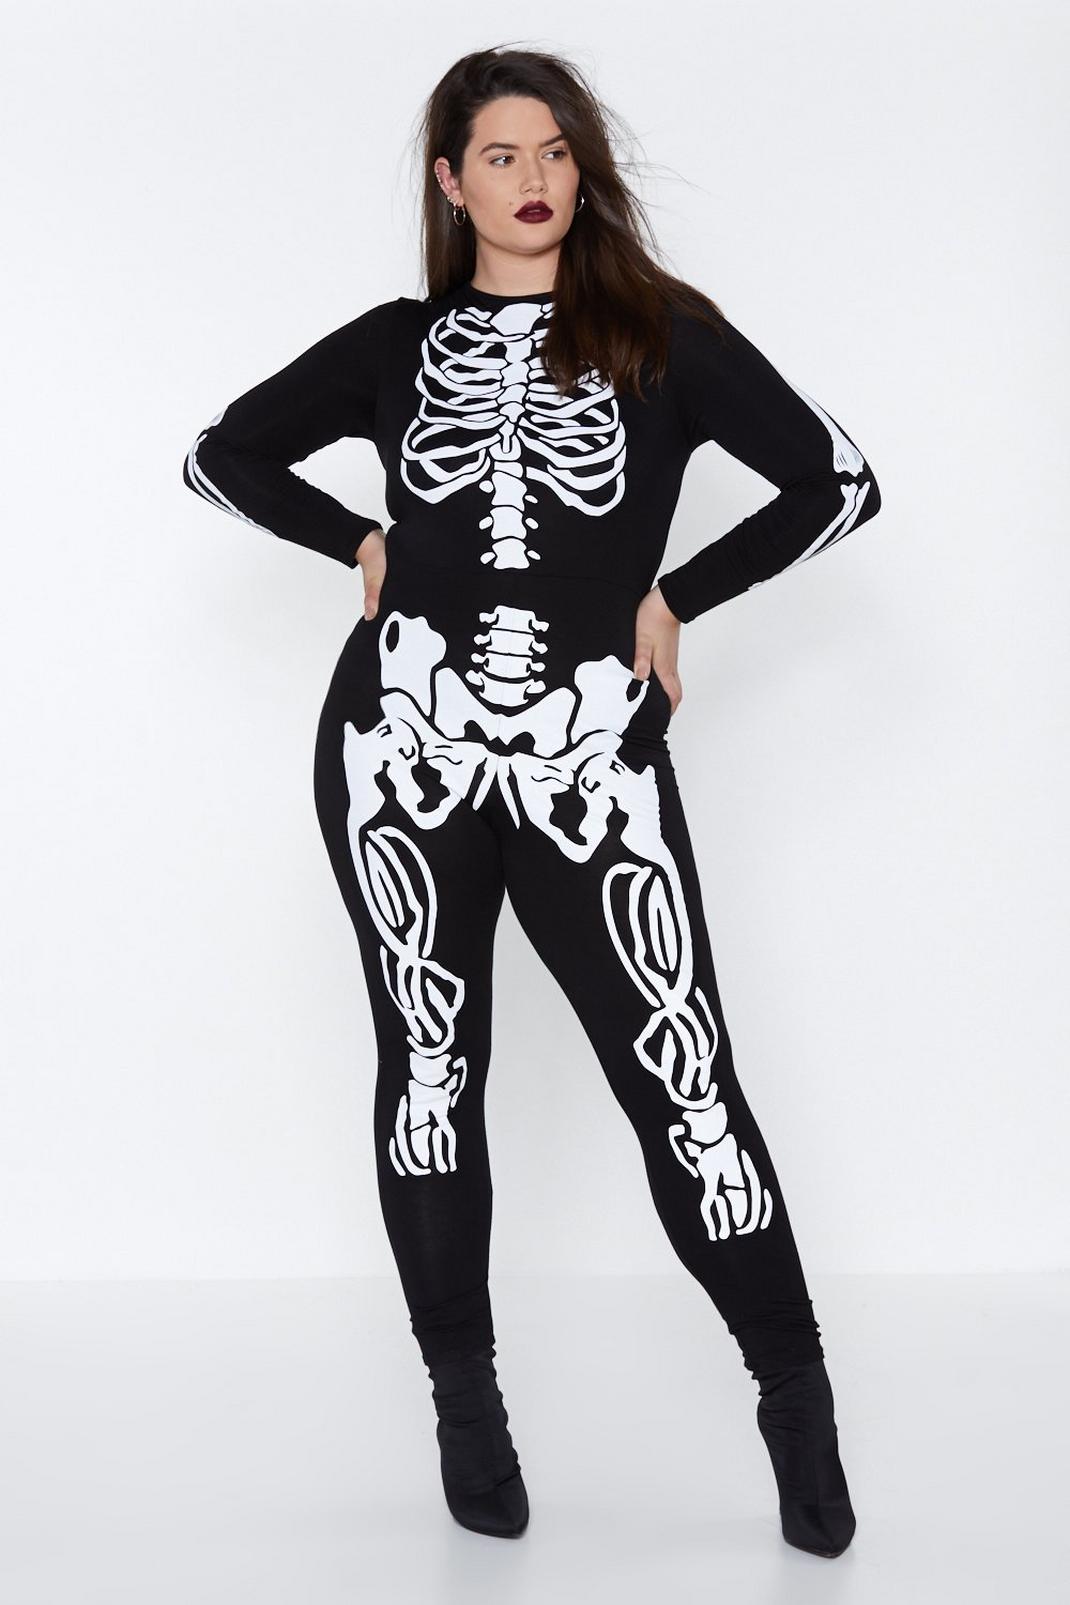 No-Body's Fool Skeleton Jumpsuit image number 1